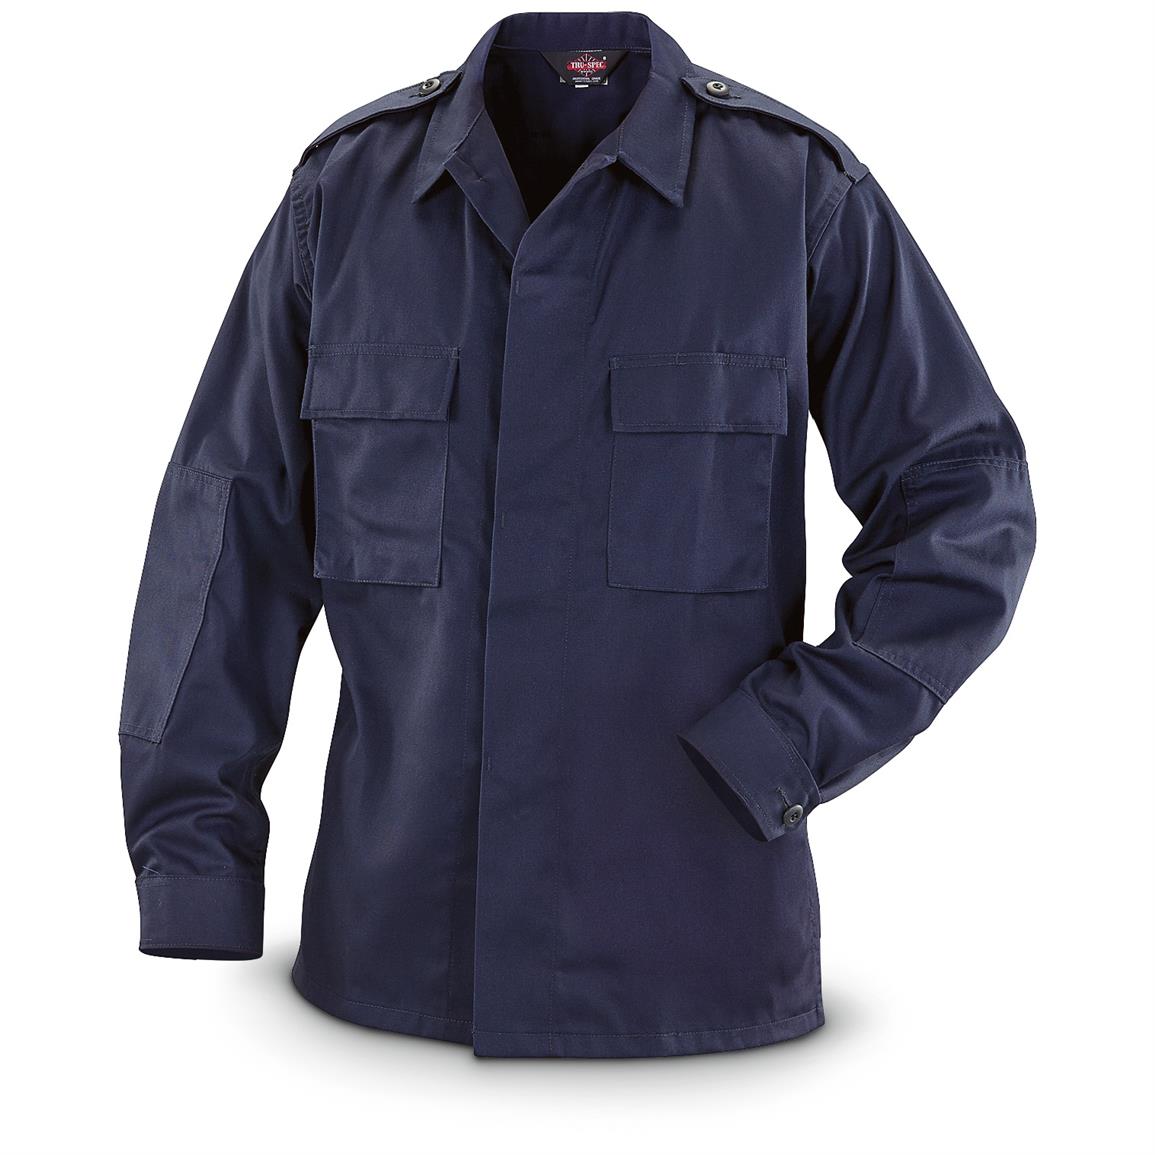 TRU-SPEC Navy Tactical Shirts, 2-Pk. - 641397, Tactical Clothing at ...